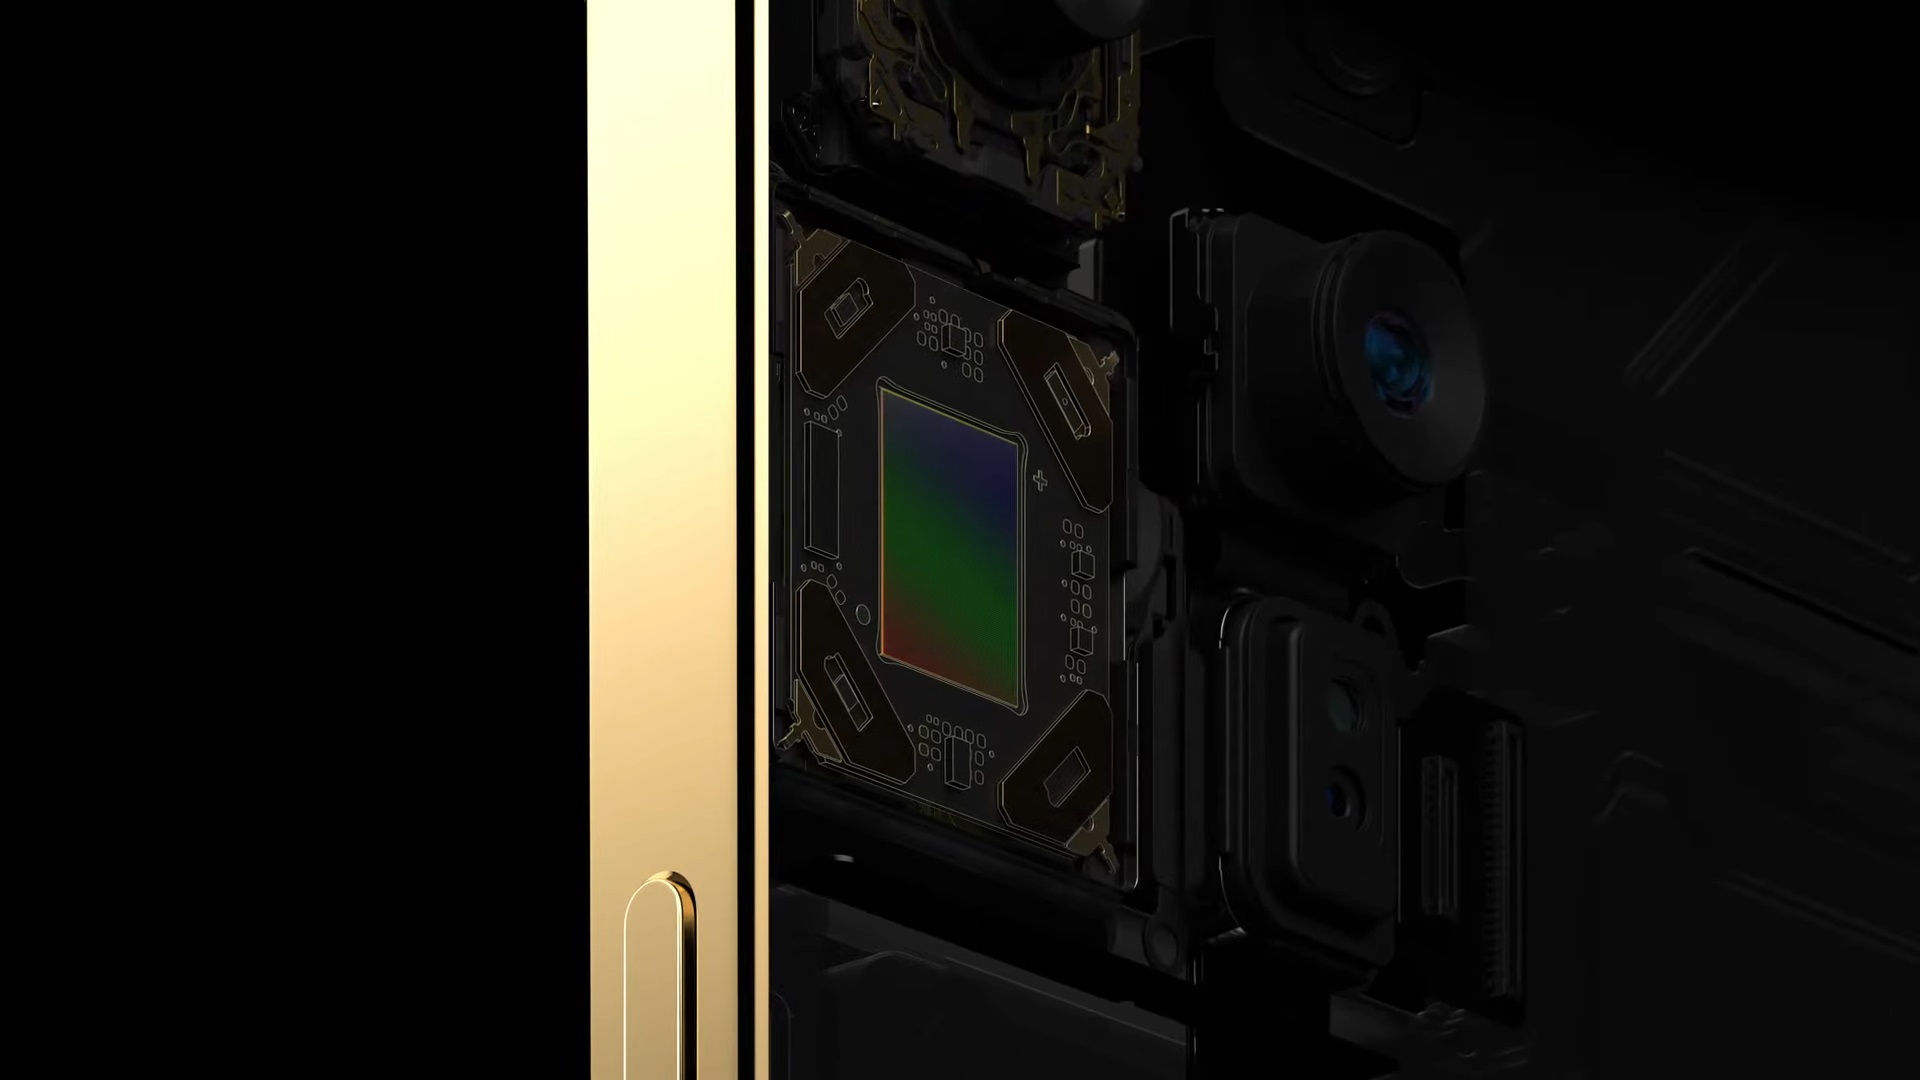 Apple iPhone 12 and 12 Pro - Larger Sensor, 10-Bit HDR Video